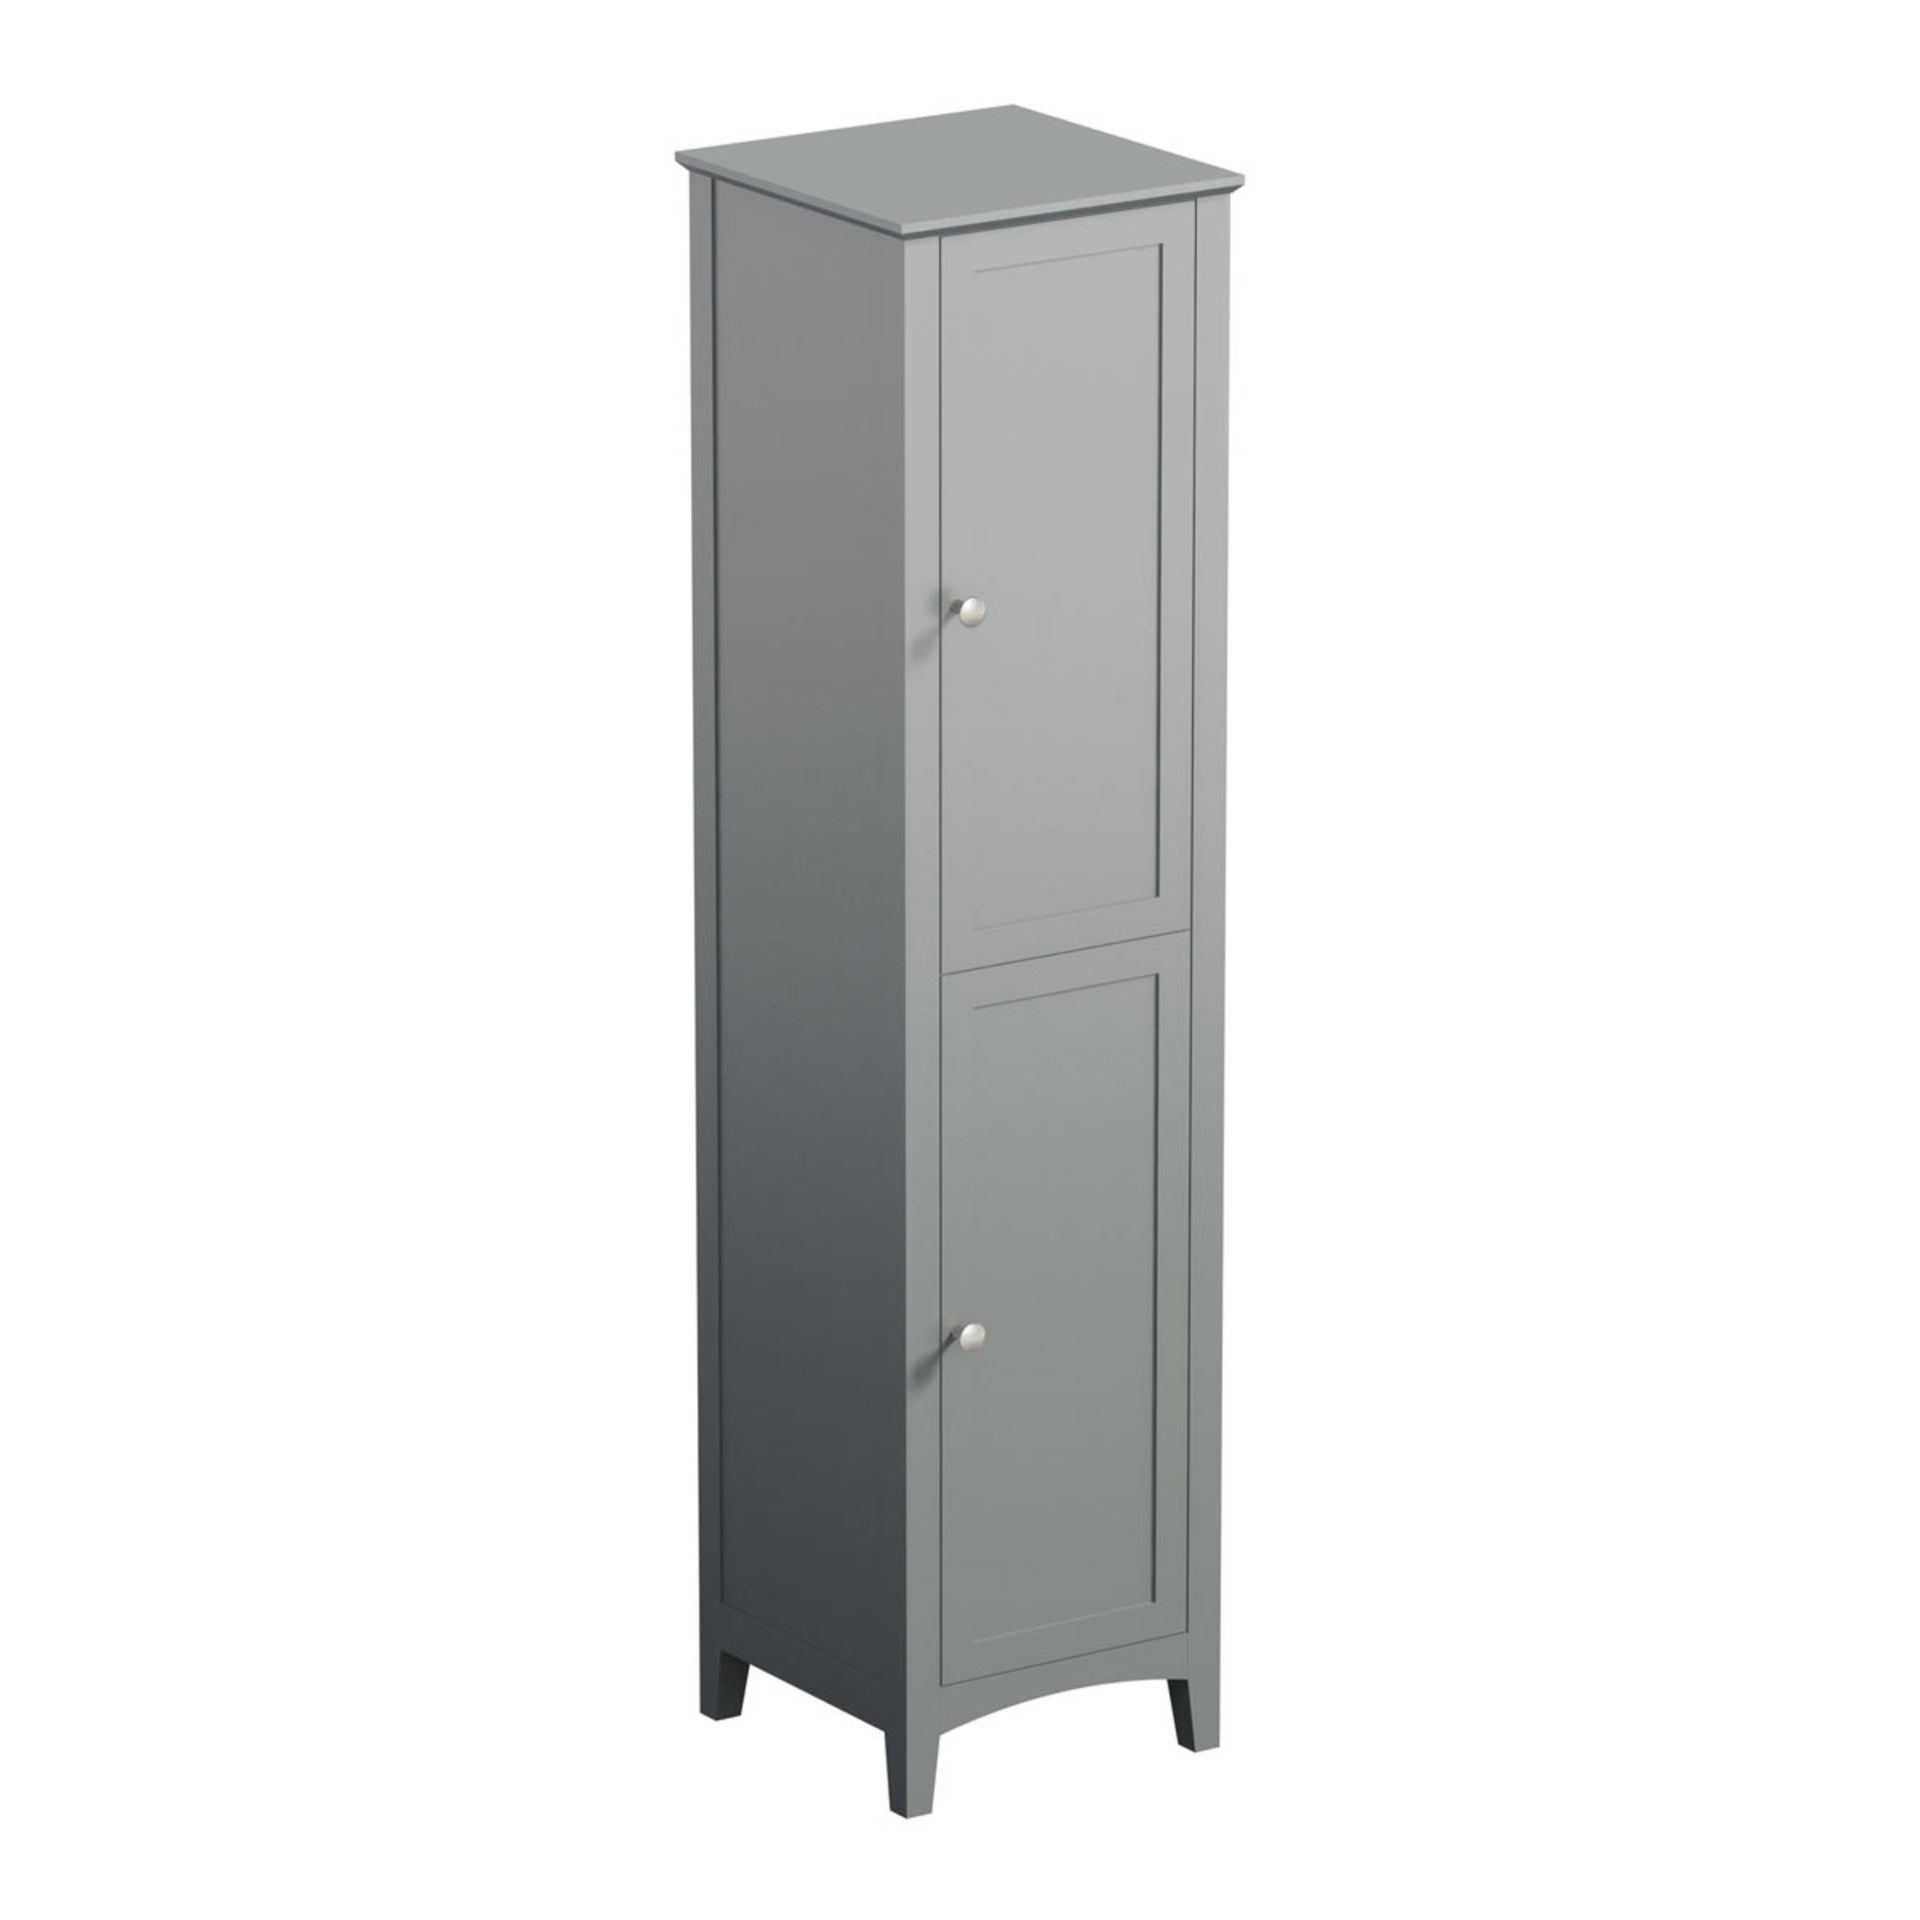 1 x Camberley Tall Bathroom Storage Unit - H1400xW400xD400mm - Contemporary Grey Finish - Unused - Image 4 of 5